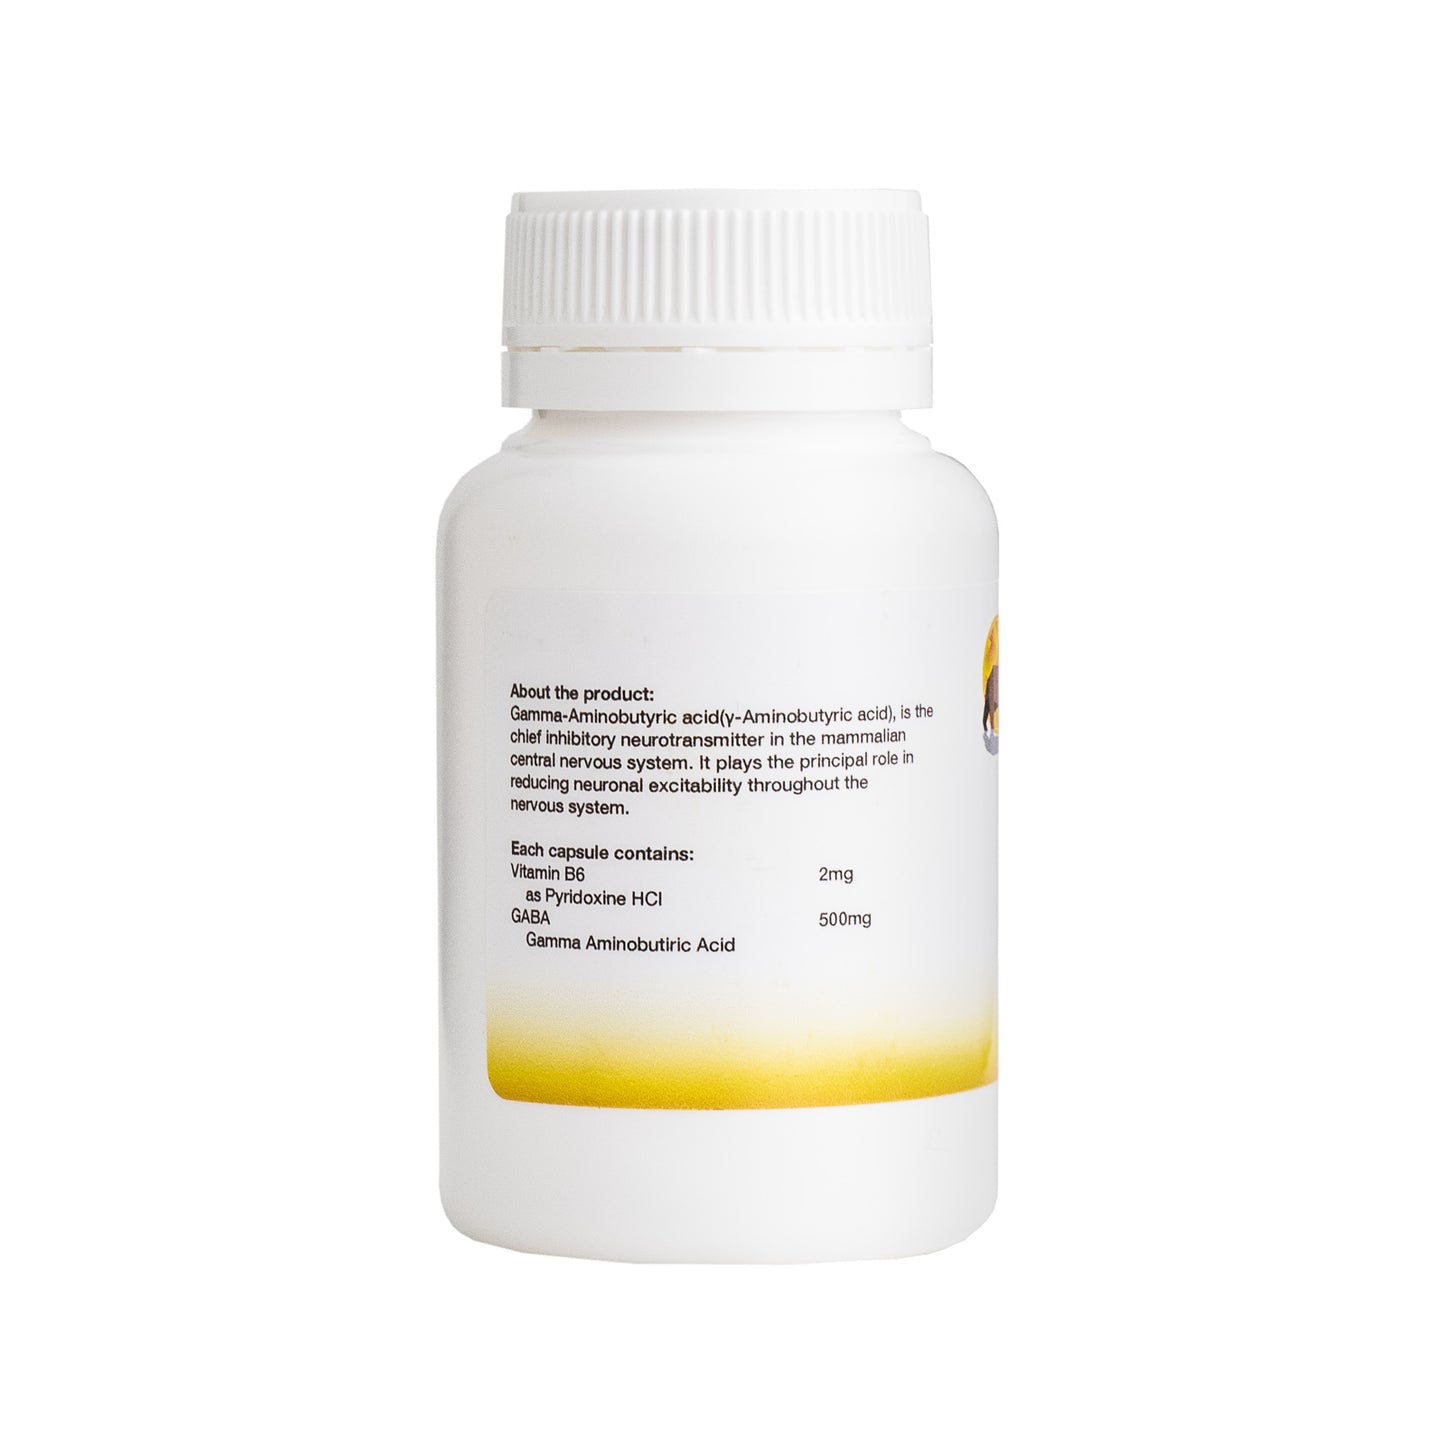 L-Theanine - 100mg - 60VCaps - Sunbear Health Supplies